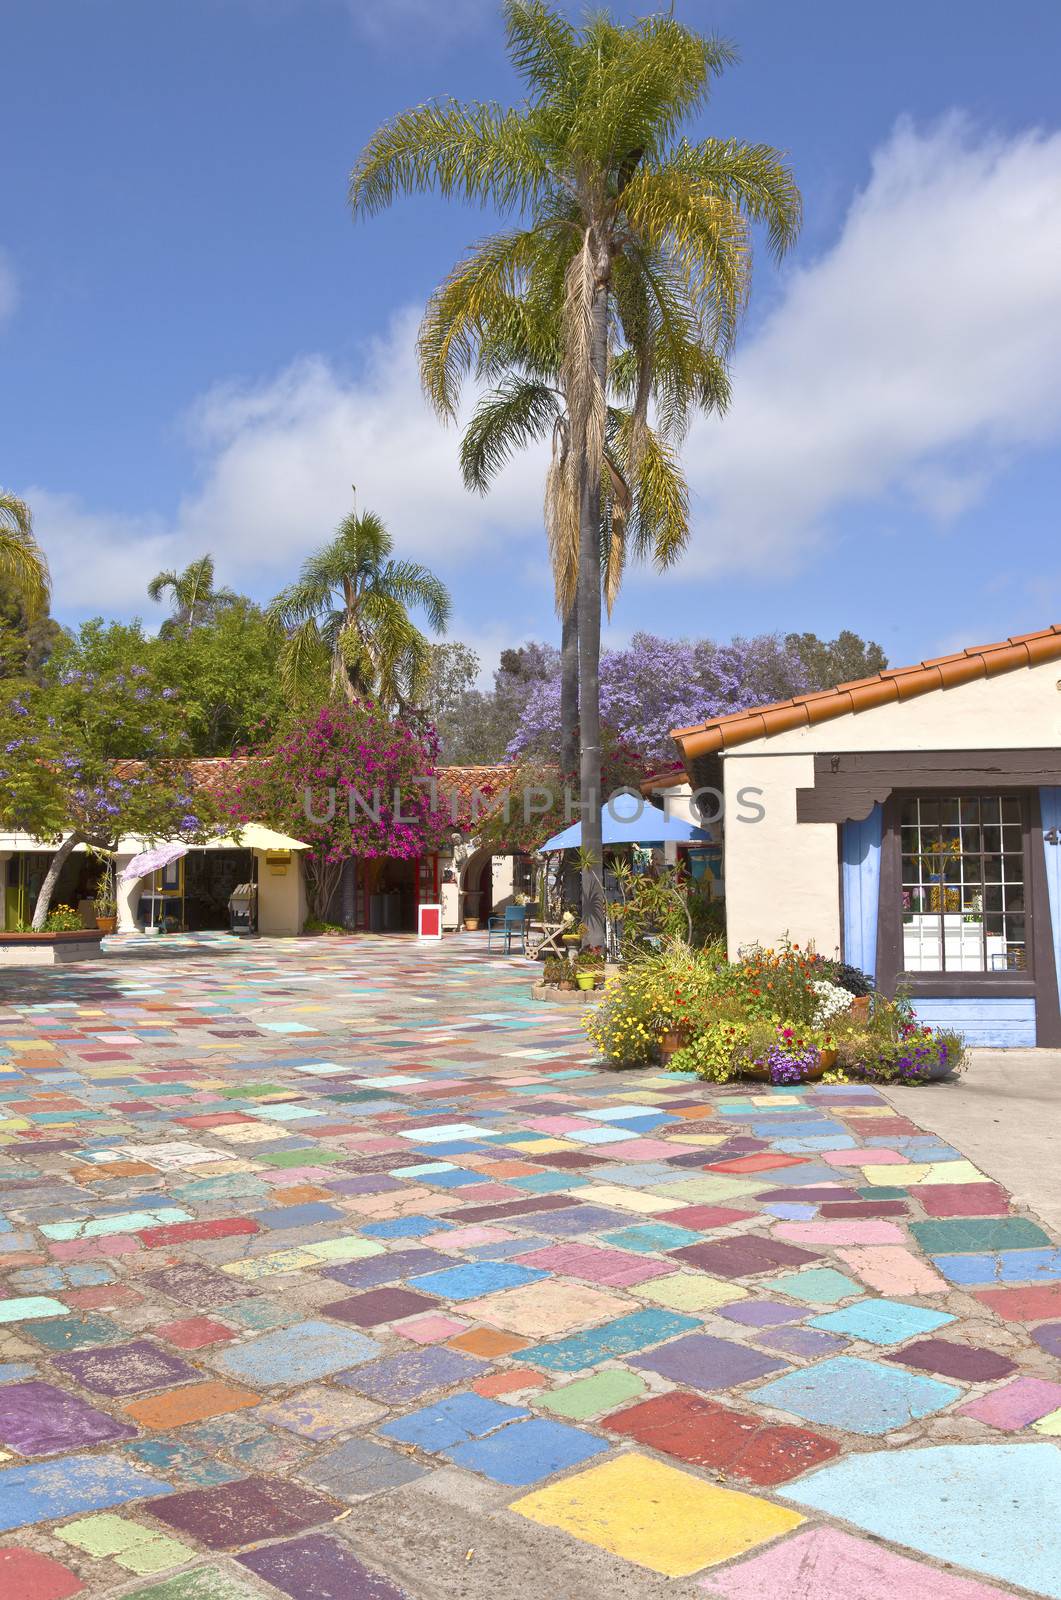 Balboa Park Spanish Village San Diego California. by Rigucci